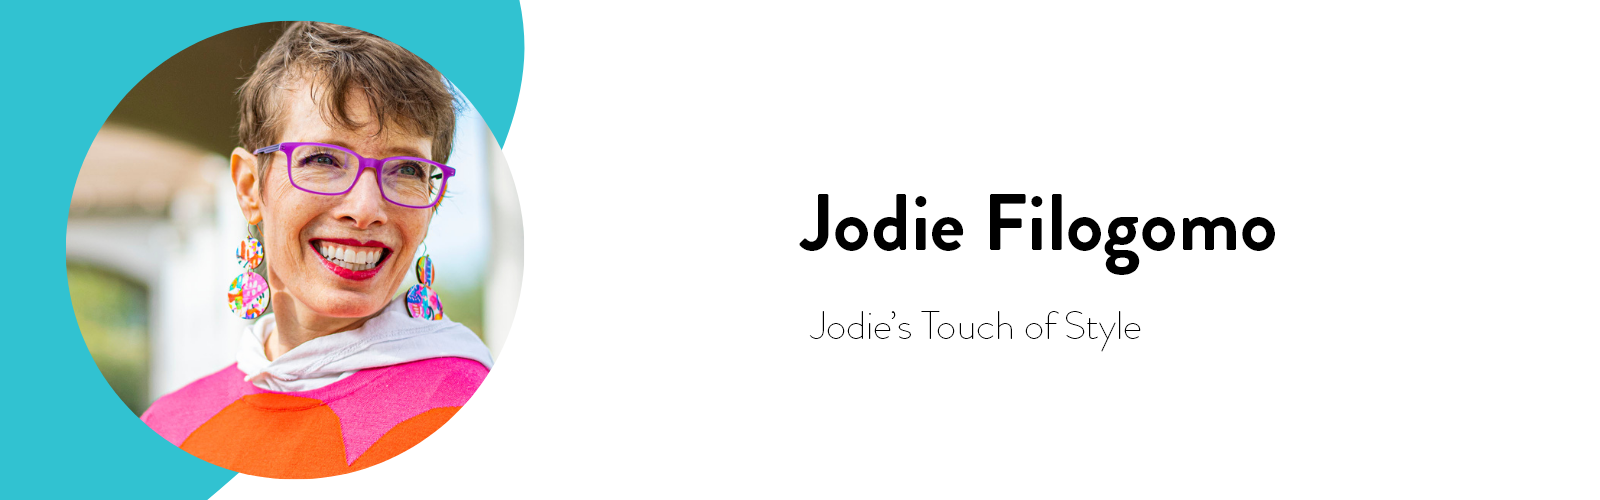 Jodie Filogomo (1600 x 500 pixels)